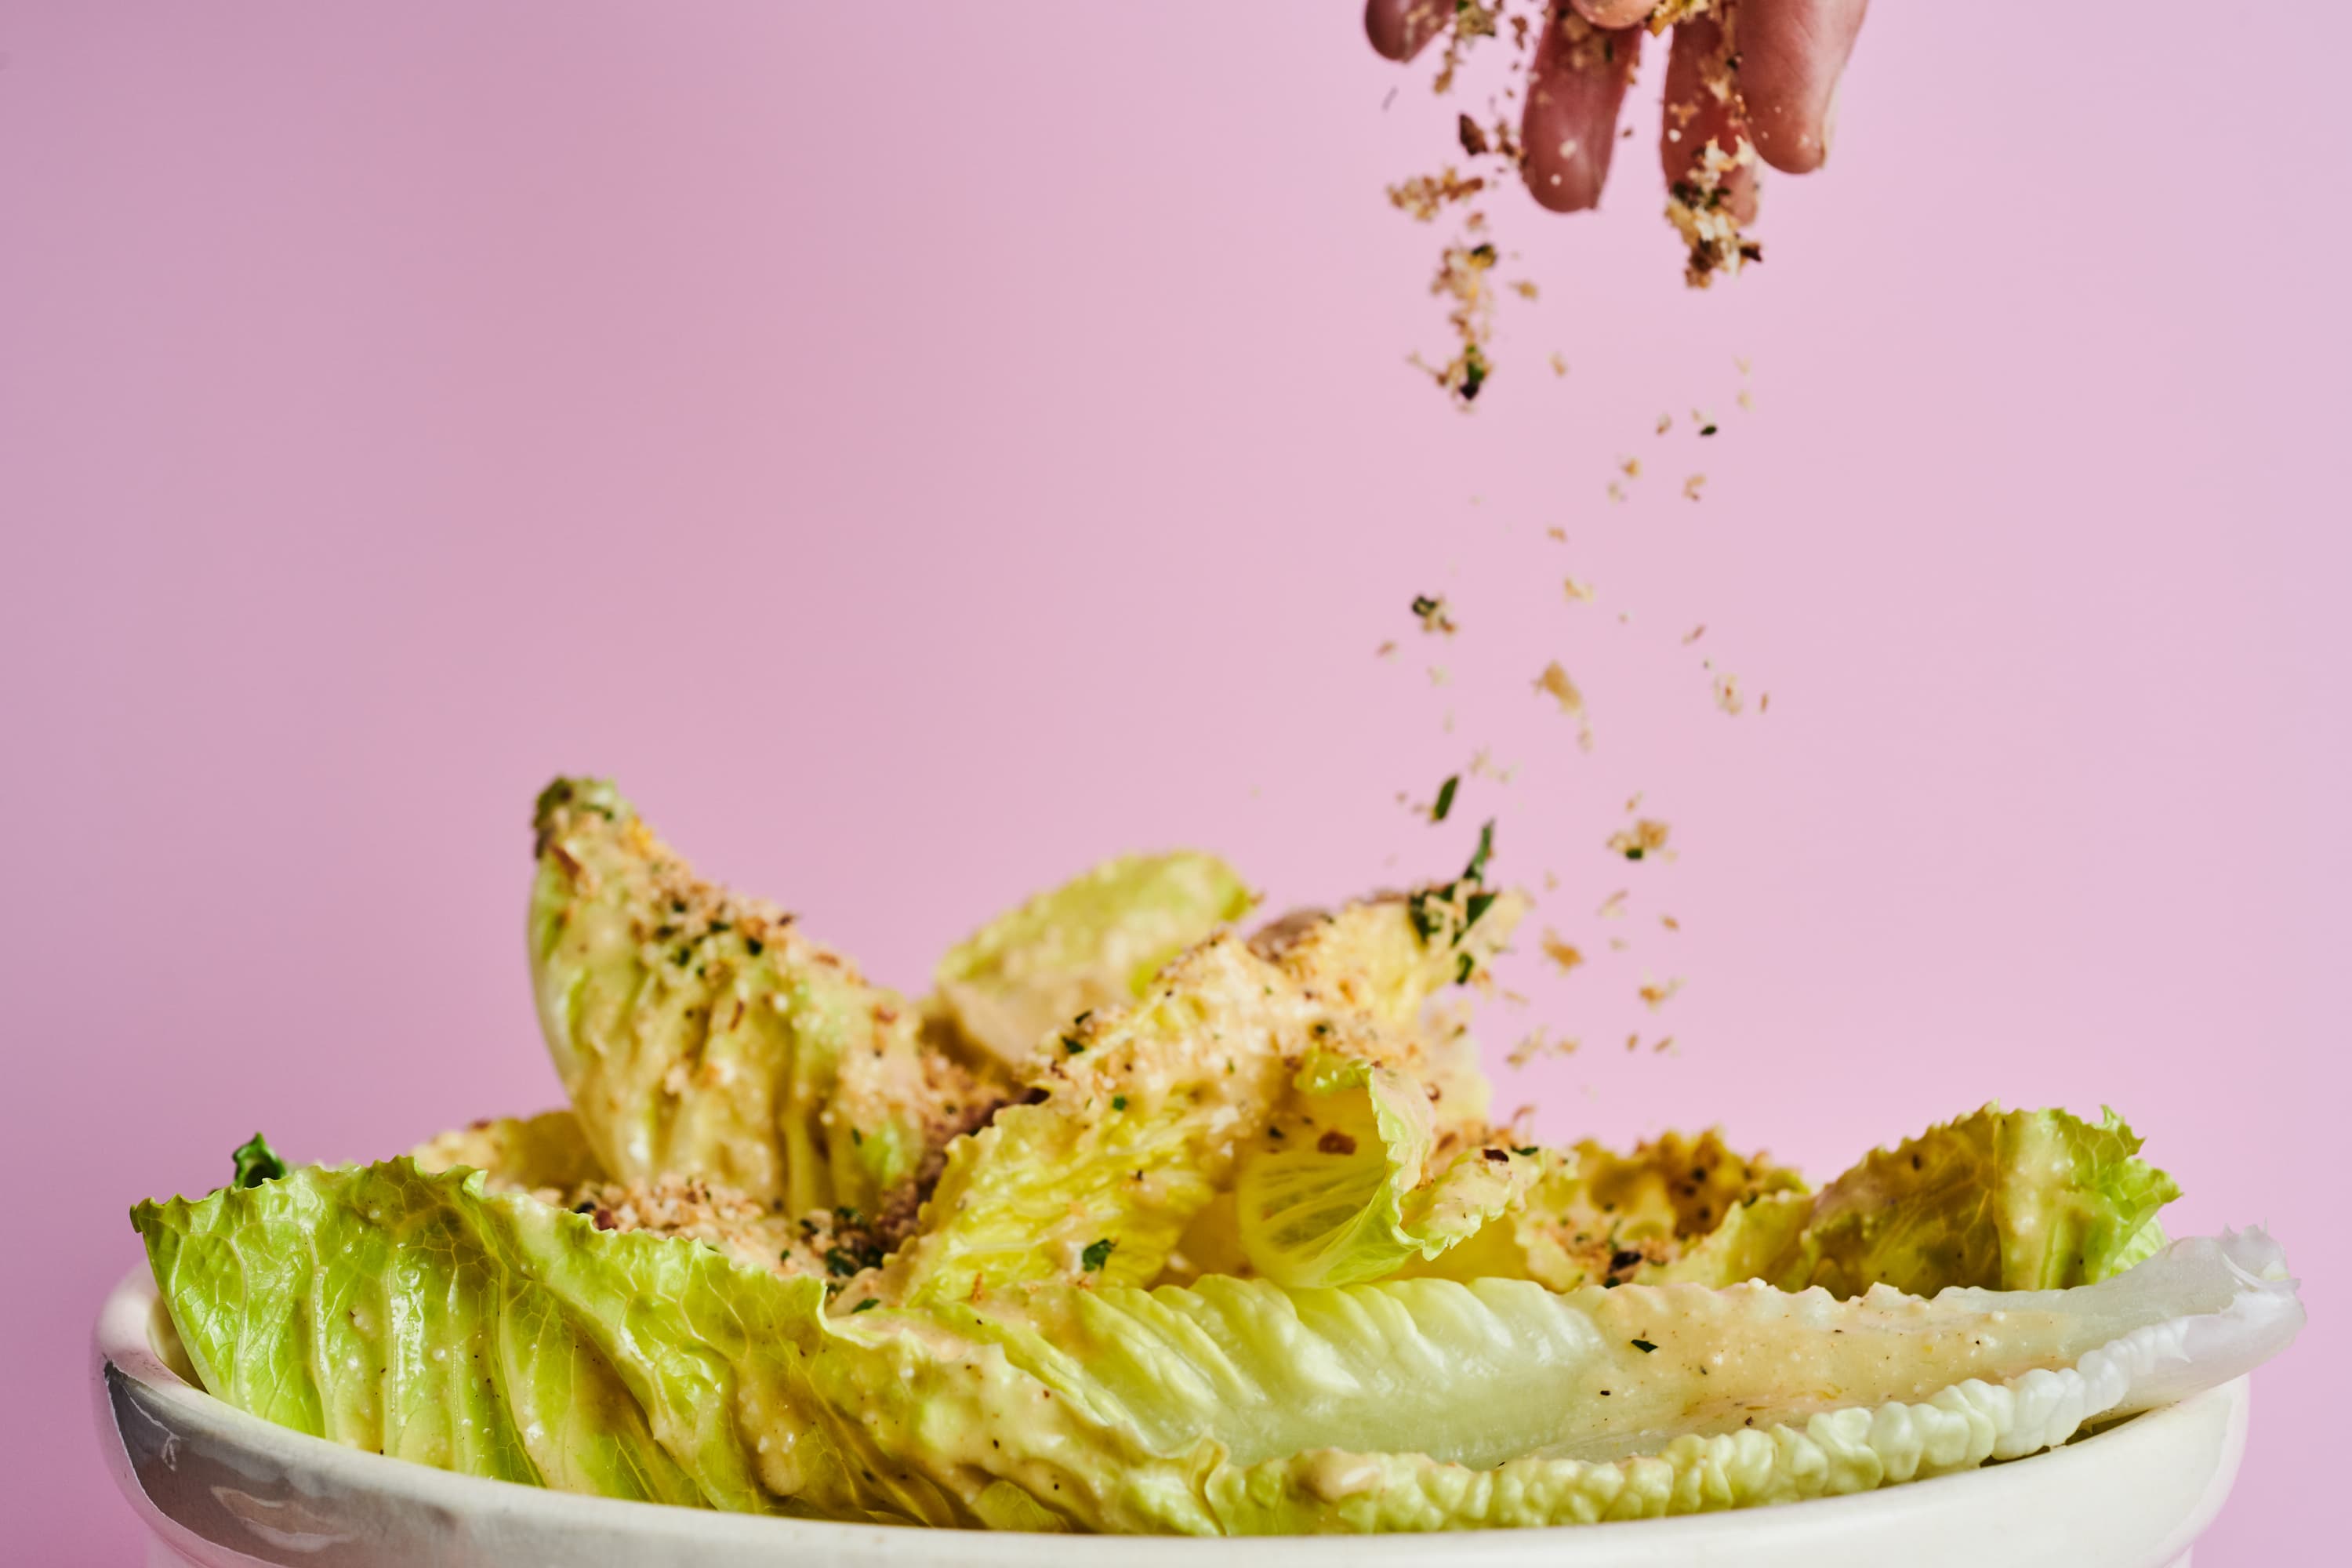 https://cdn.apartmenttherapy.info/image/upload/v1591372635/k/Photo/Recipes/2020-06-how-we-salad/Salads-New-Caesar/Salads-New-Caesar1046.jpg